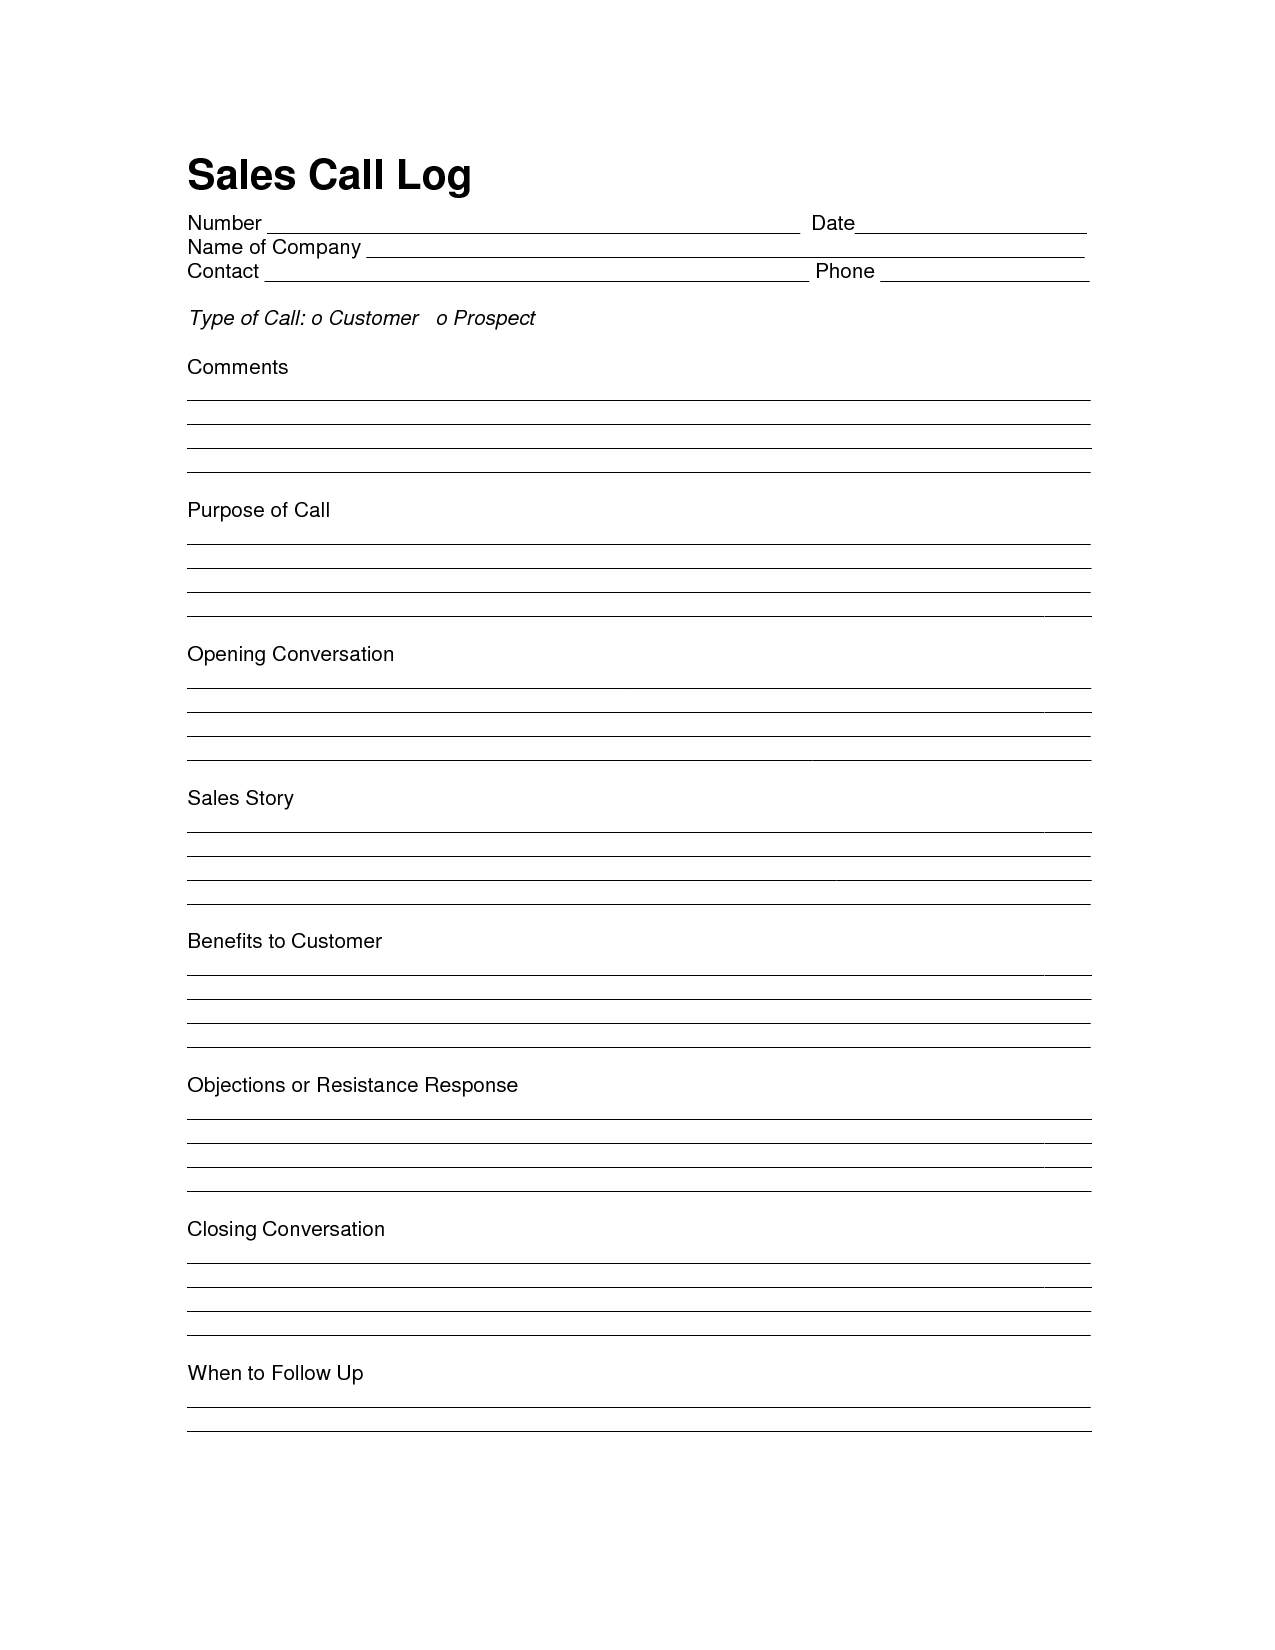 Sales Log Sheet Template | Sales Call Log Template | Call Log - Free Printable Message Sheets